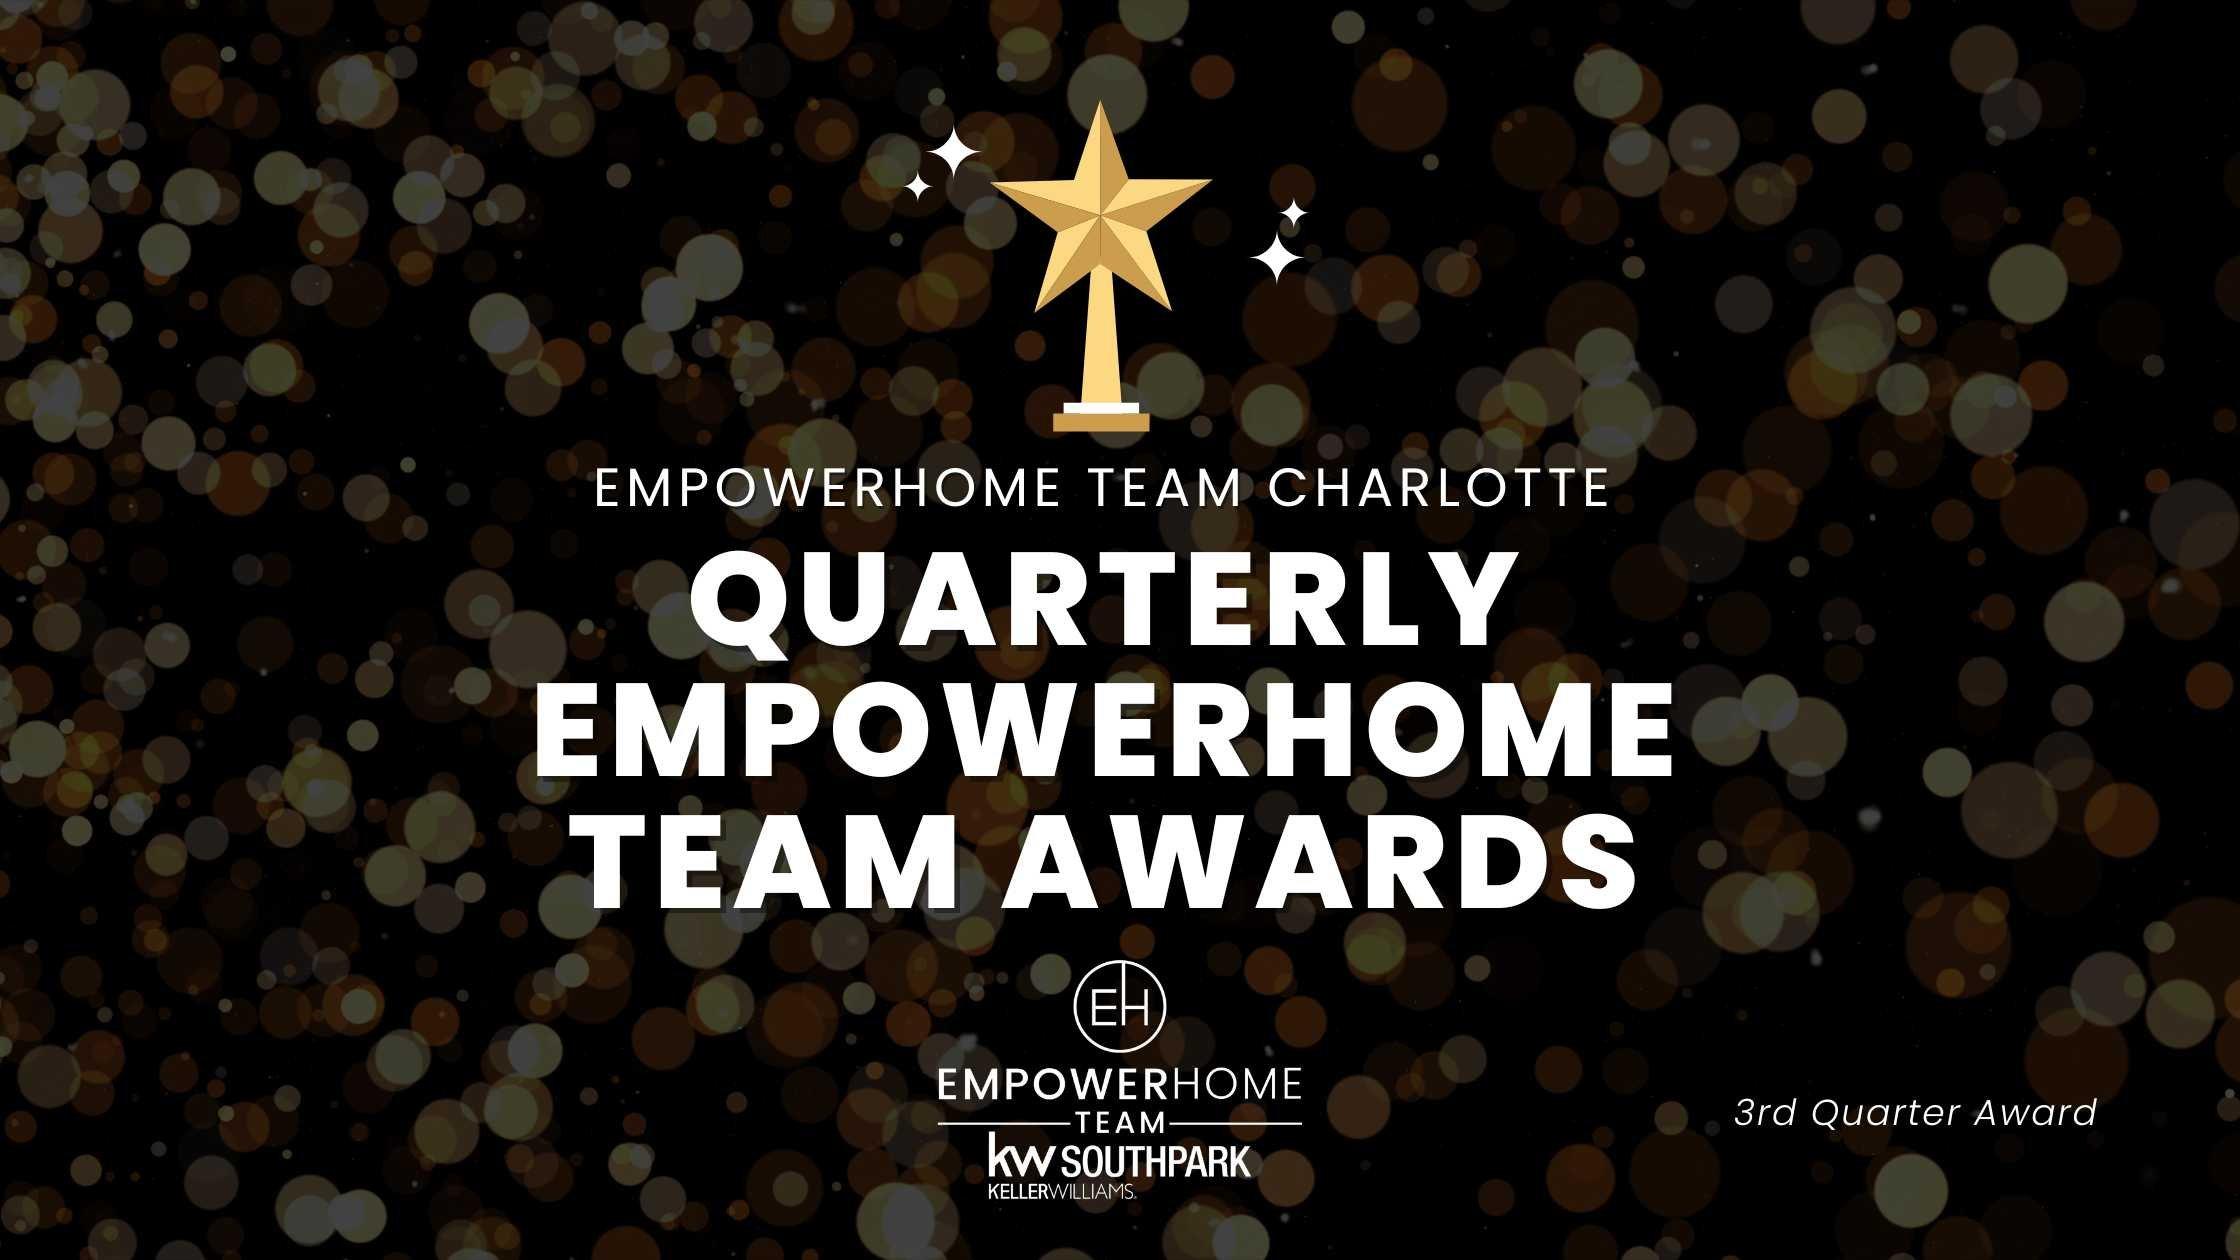 EmpowerHome Team Awards: Charleston 3rd 12 week Year 2022